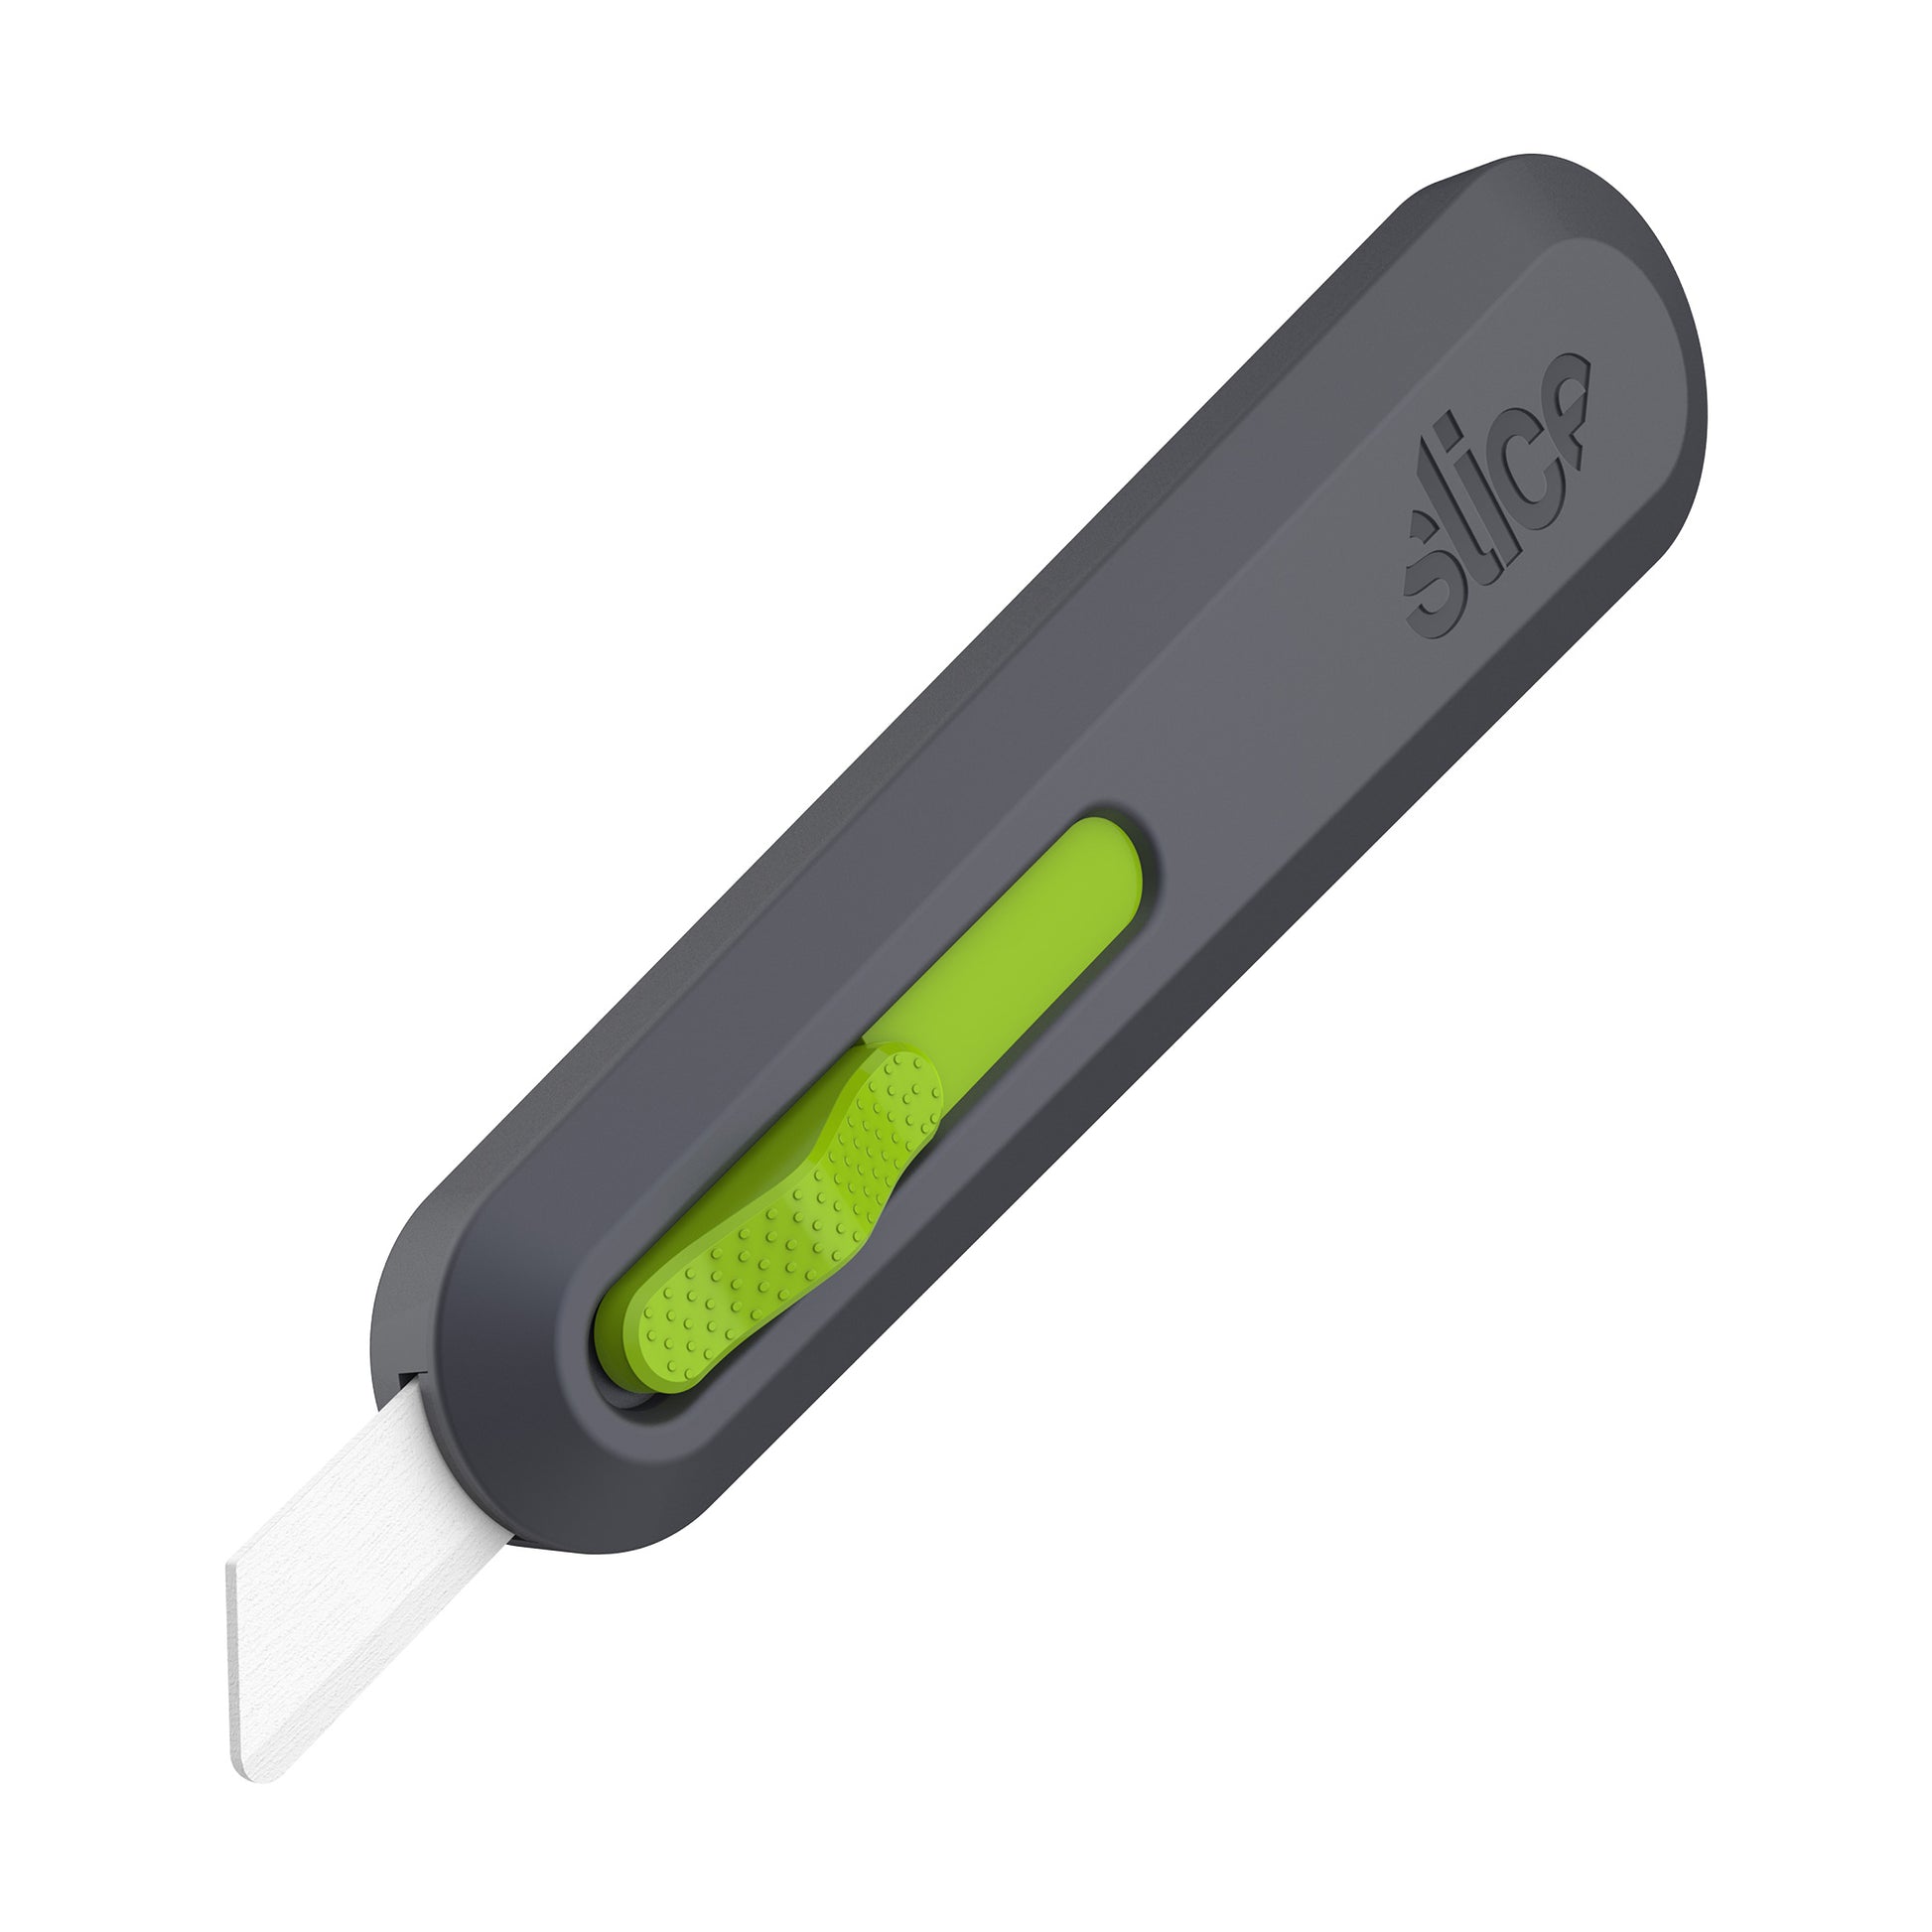 Slice Auto-Retractable Utility Knife - DaltonSafety